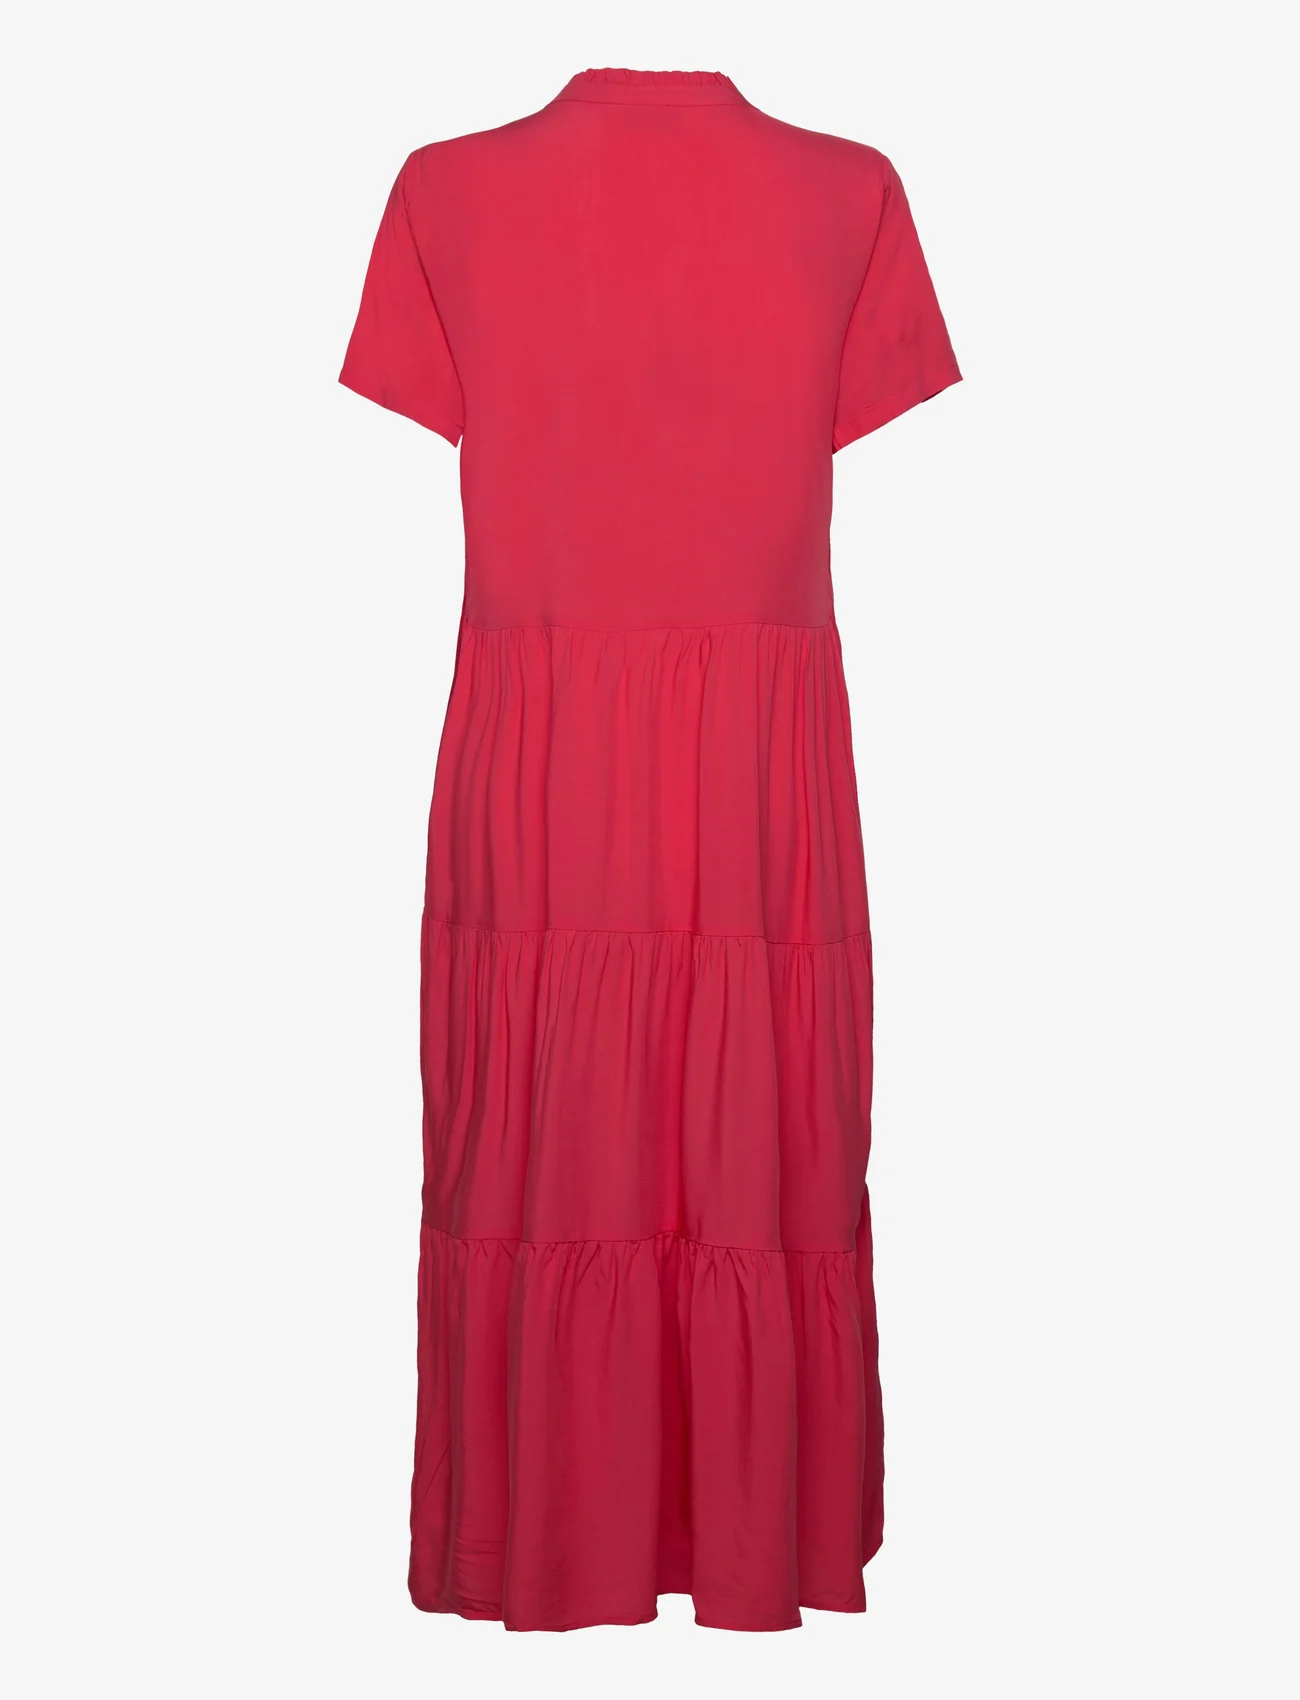 Saint Tropez - EdaSZ SS Maxi Dress - skjortklänningar - hibiscus - 1